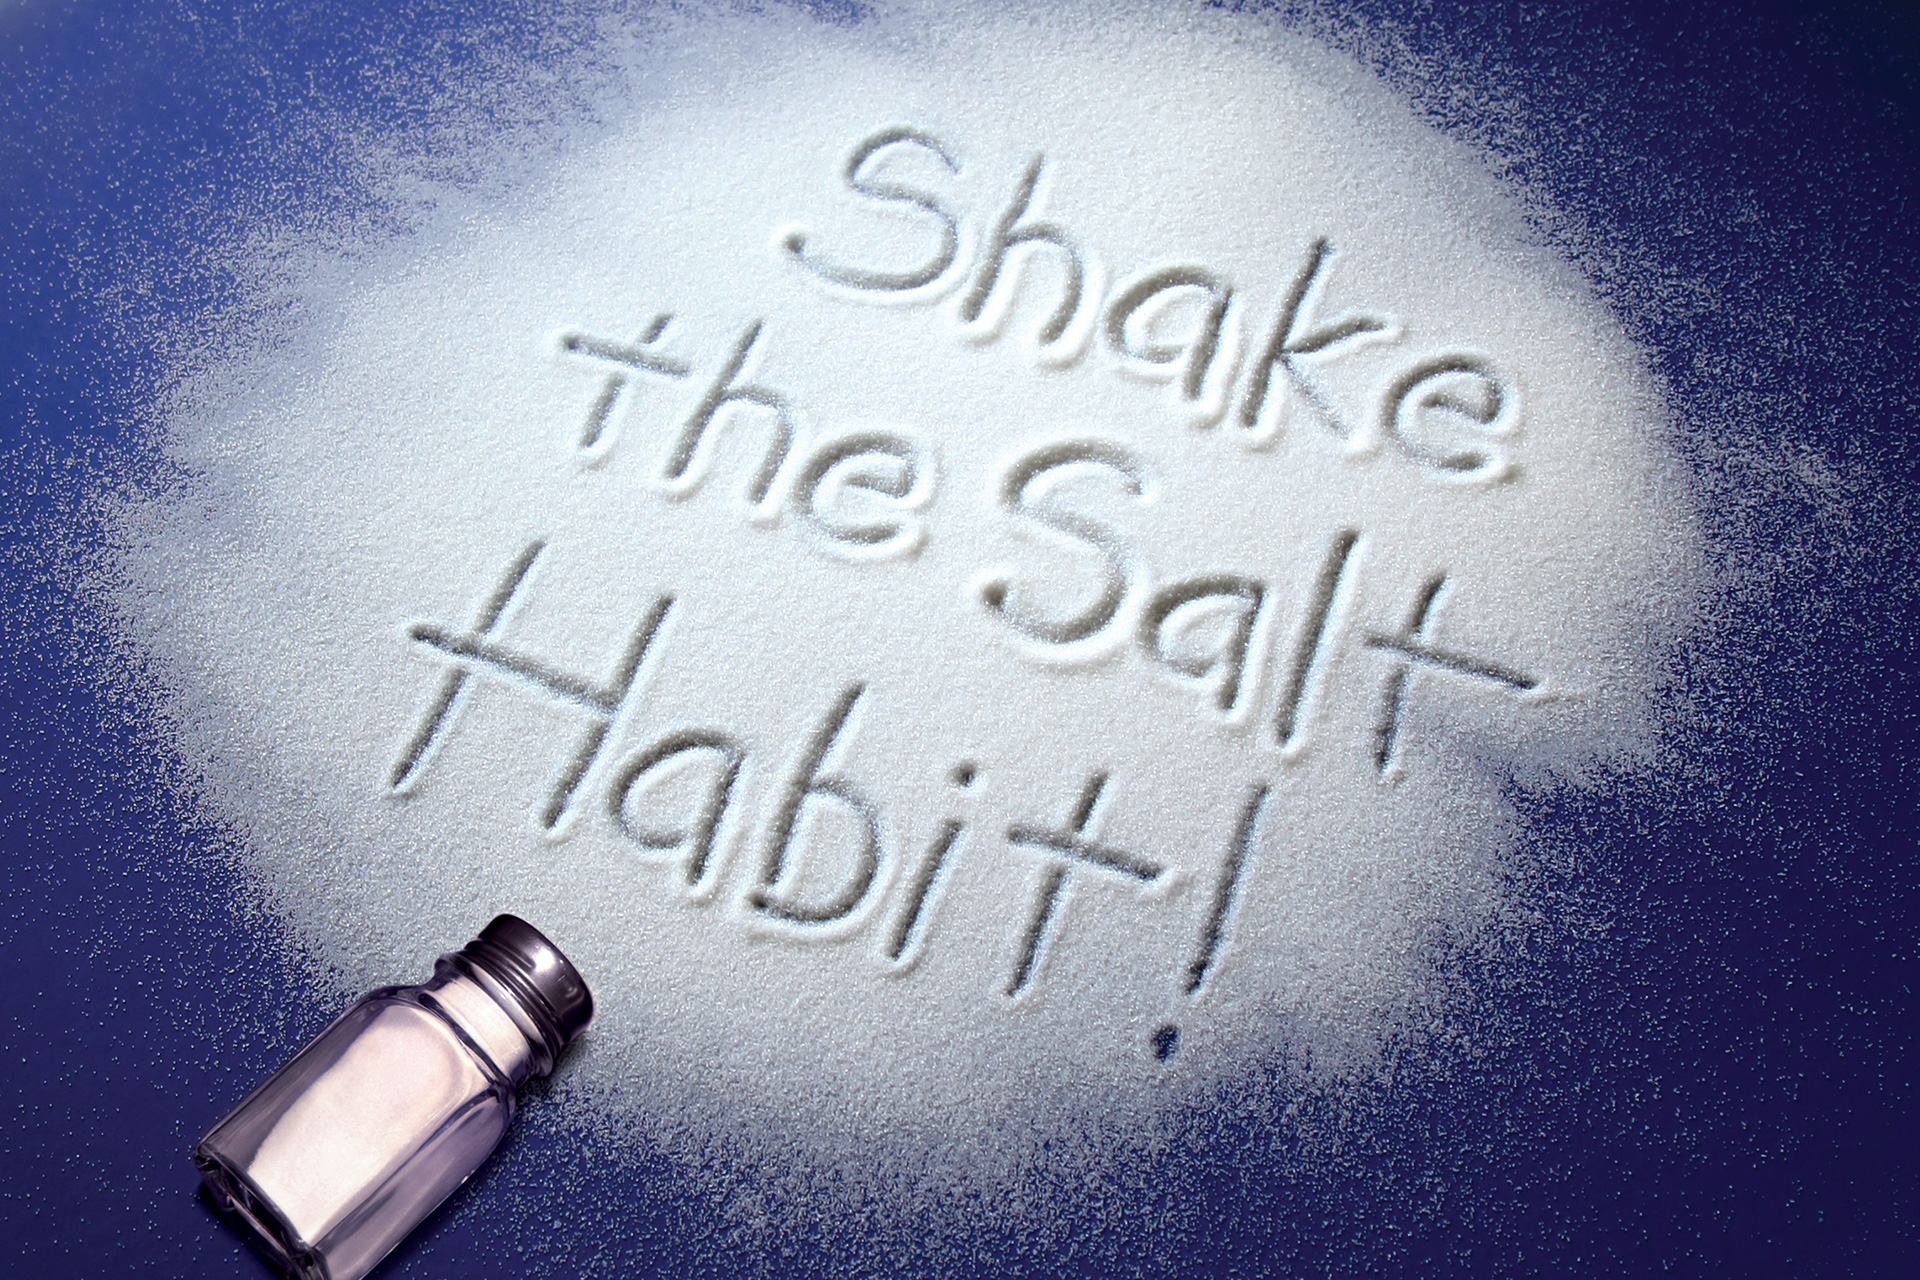 Shake the Salt Habit